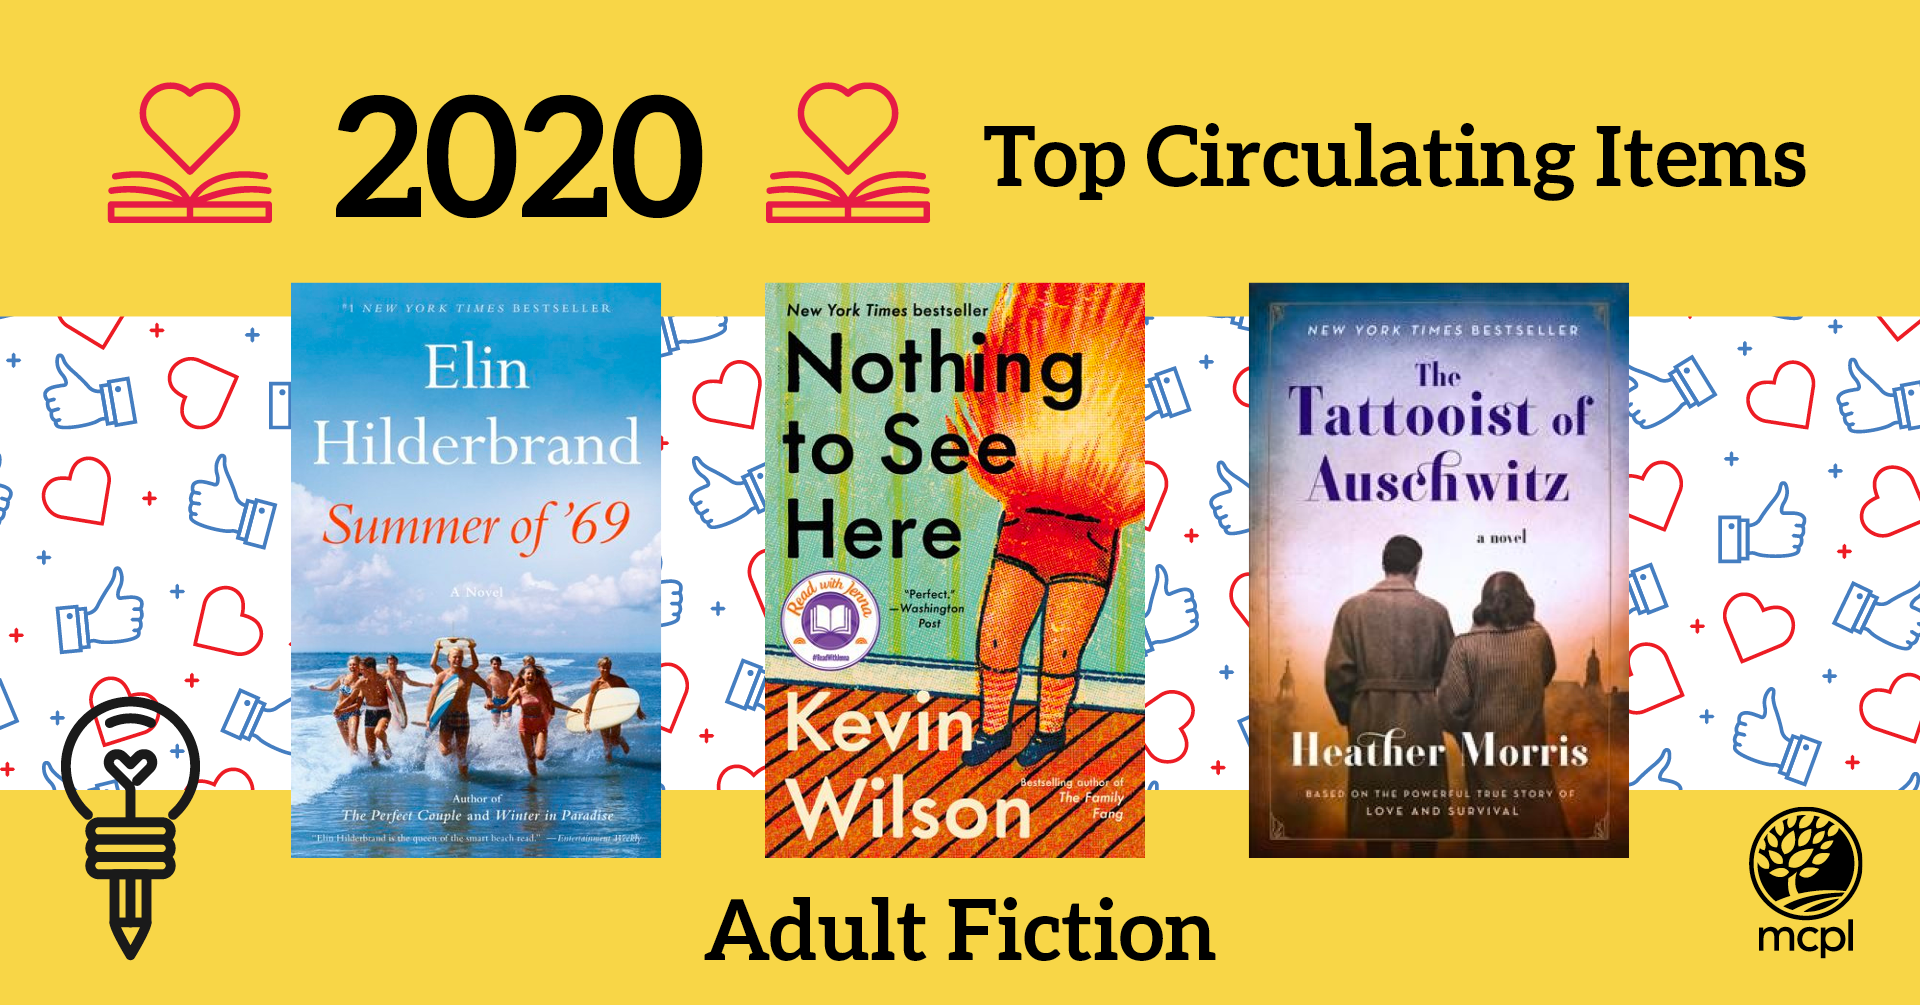 2020 Top Circulating Items: Adult Fiction